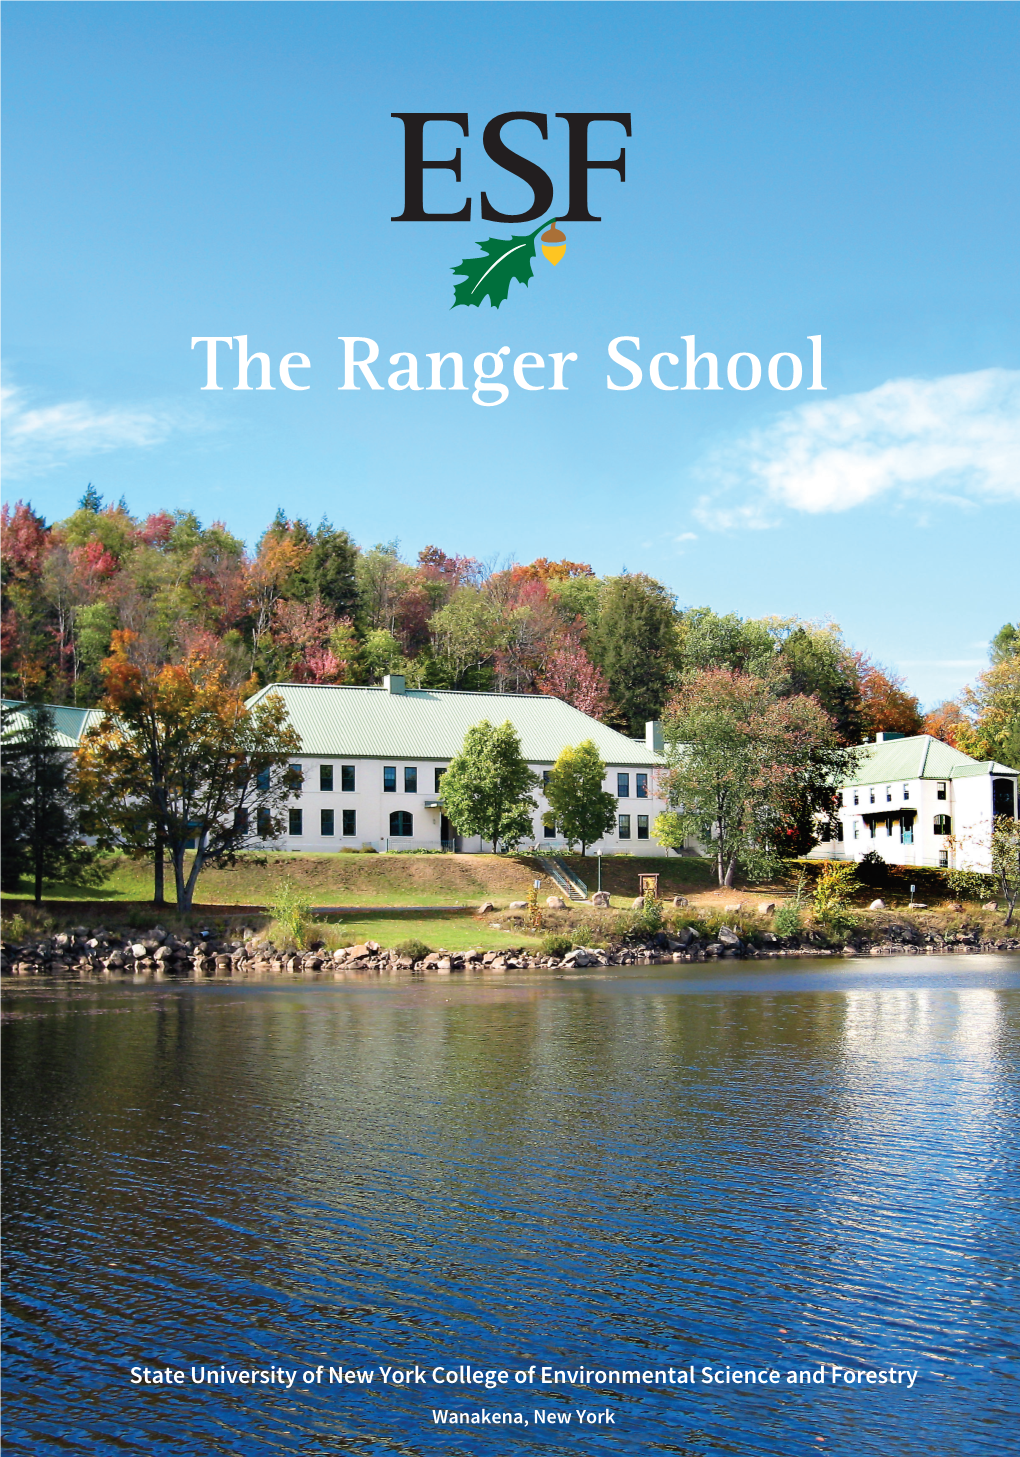 The Ranger School